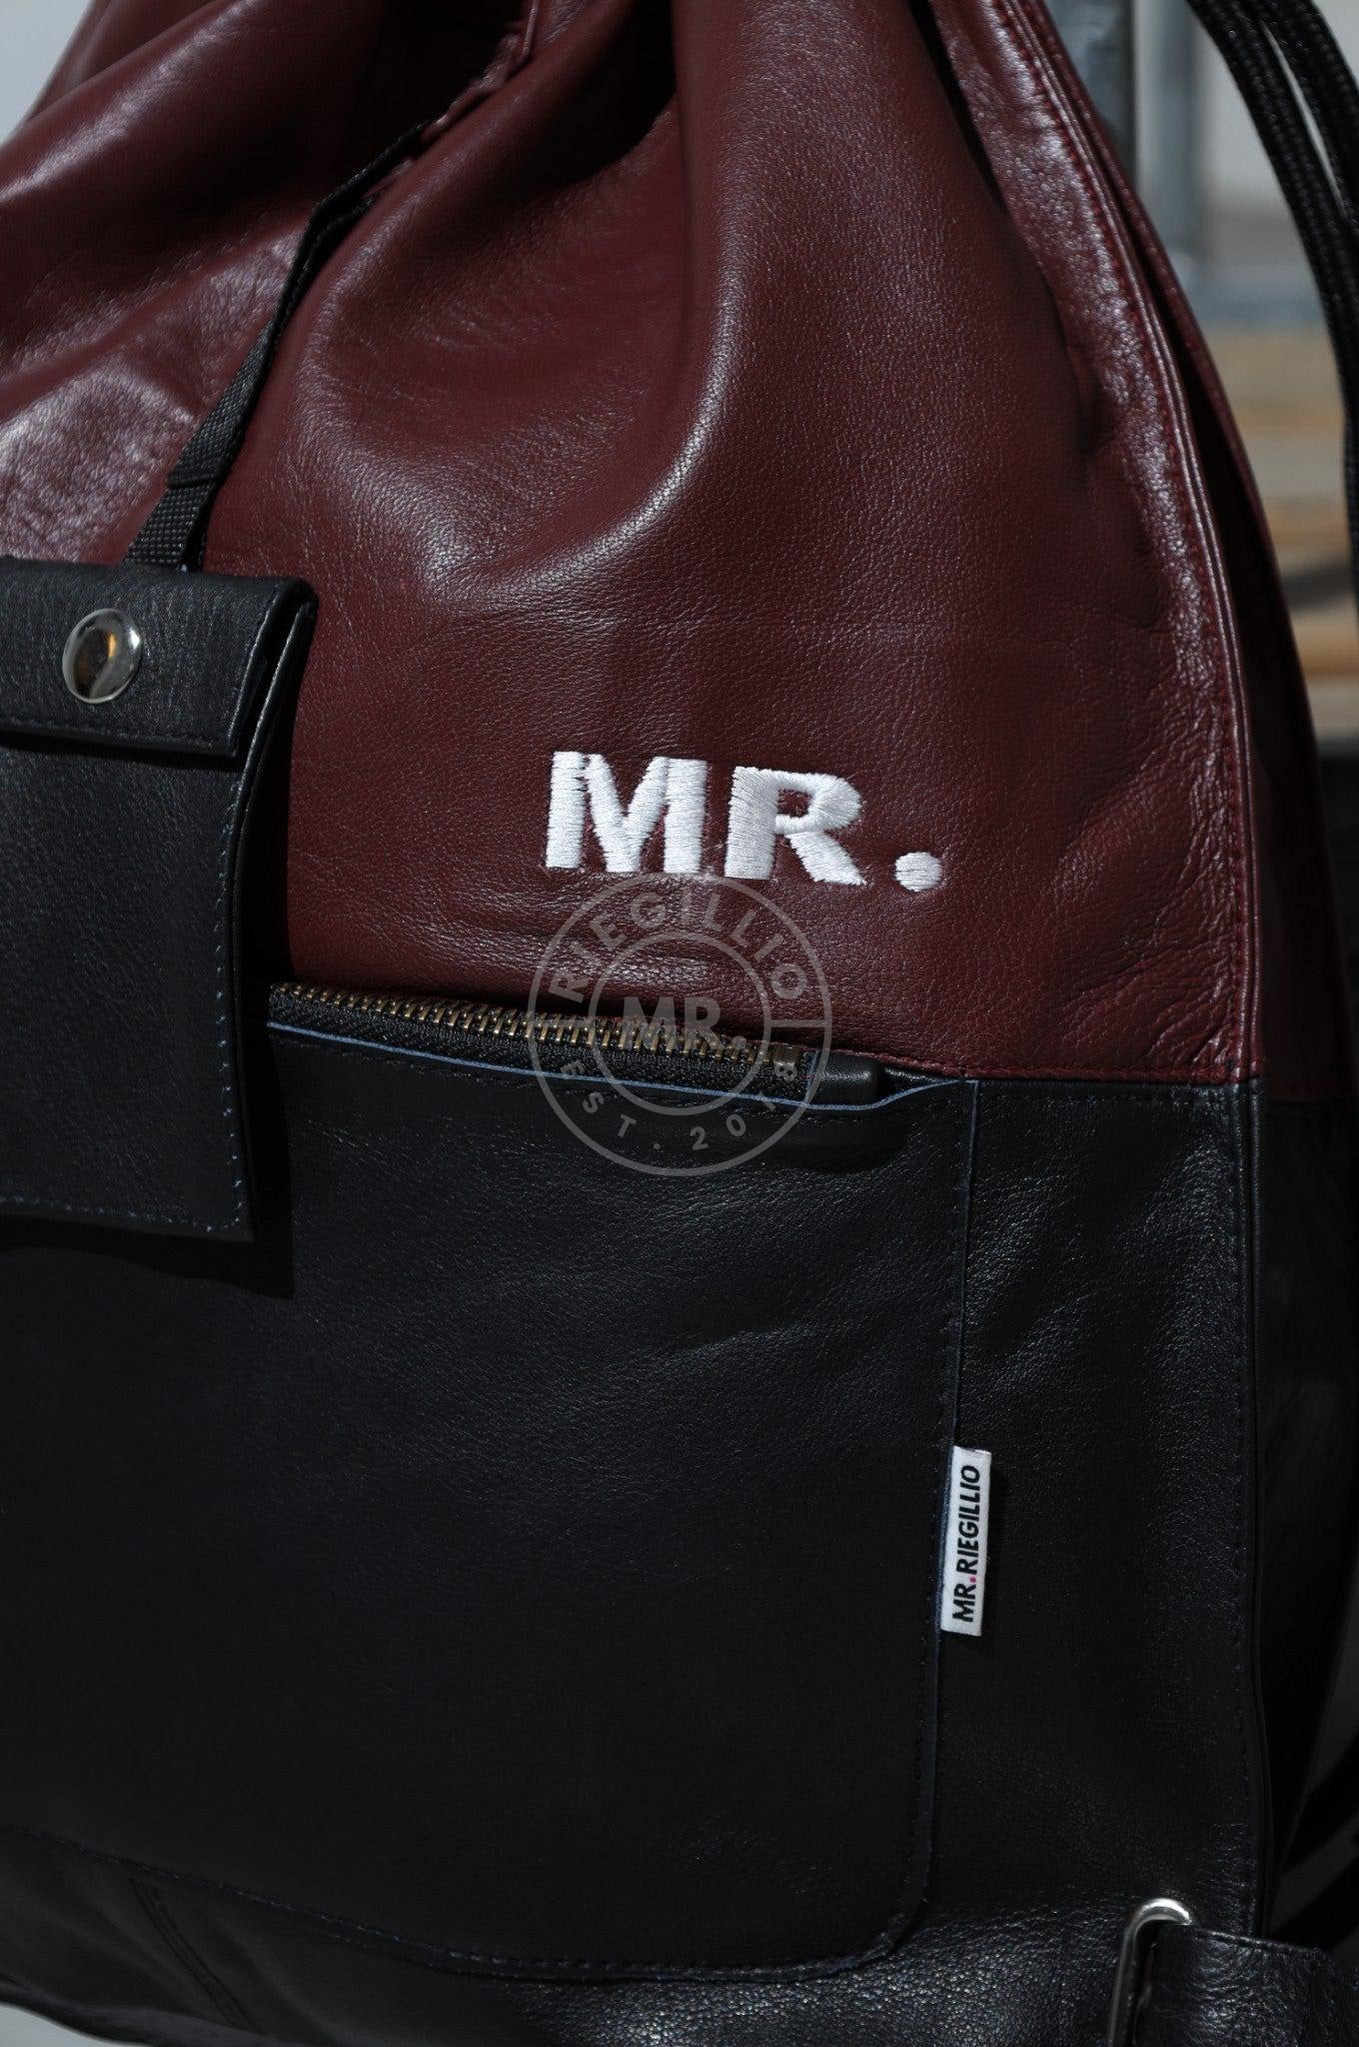 Leather Backpack Black - Burgundy-at MR. Riegillio